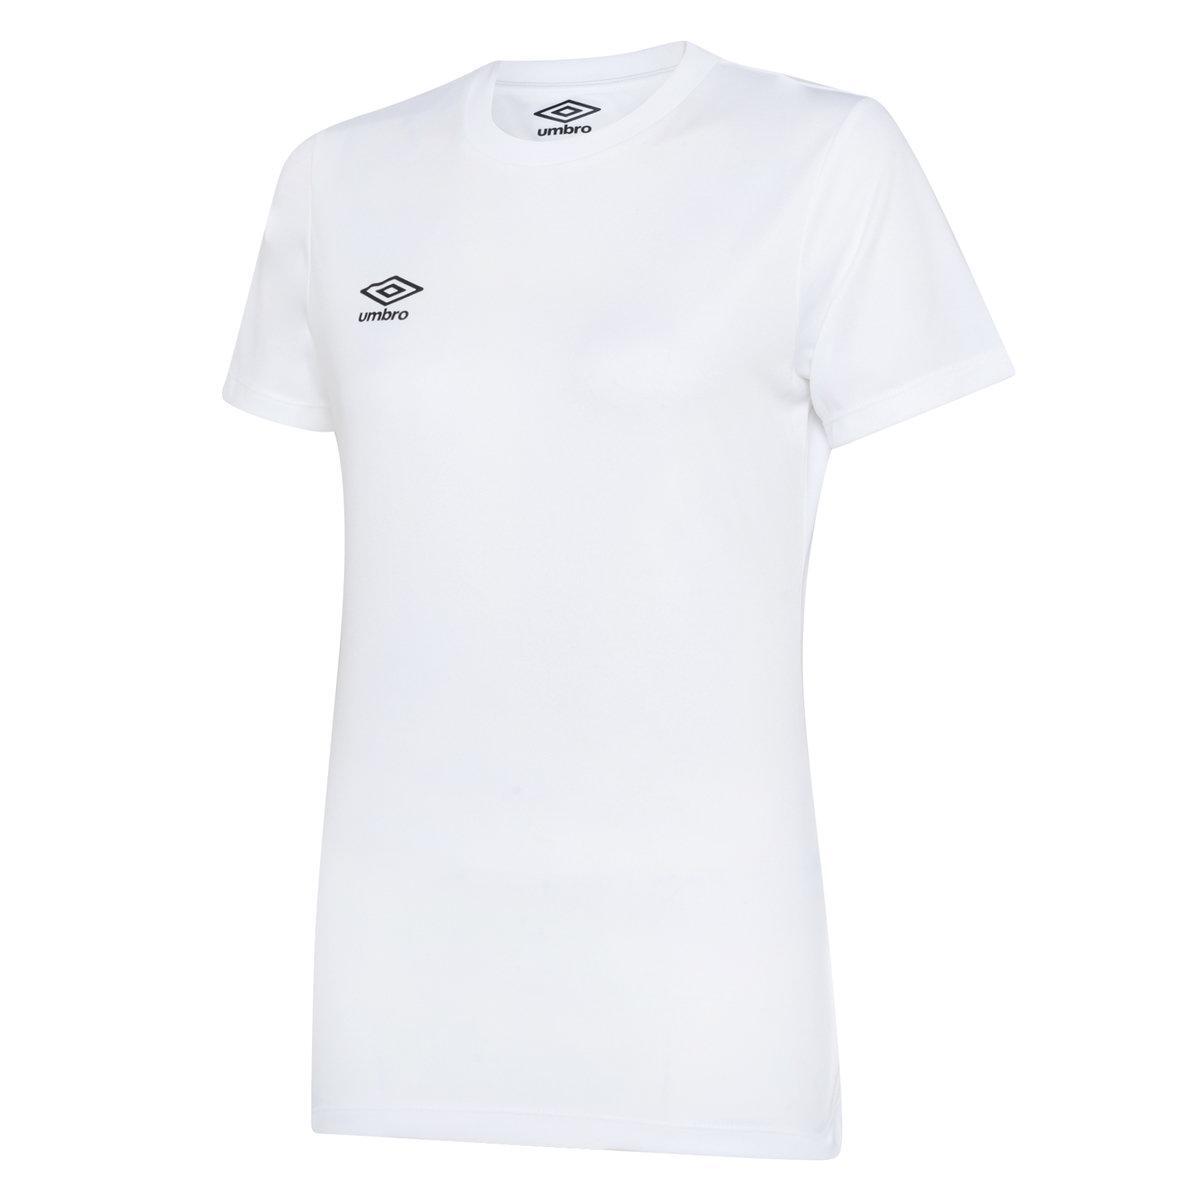 UMBRO Womens/Ladies Club Jersey (White)